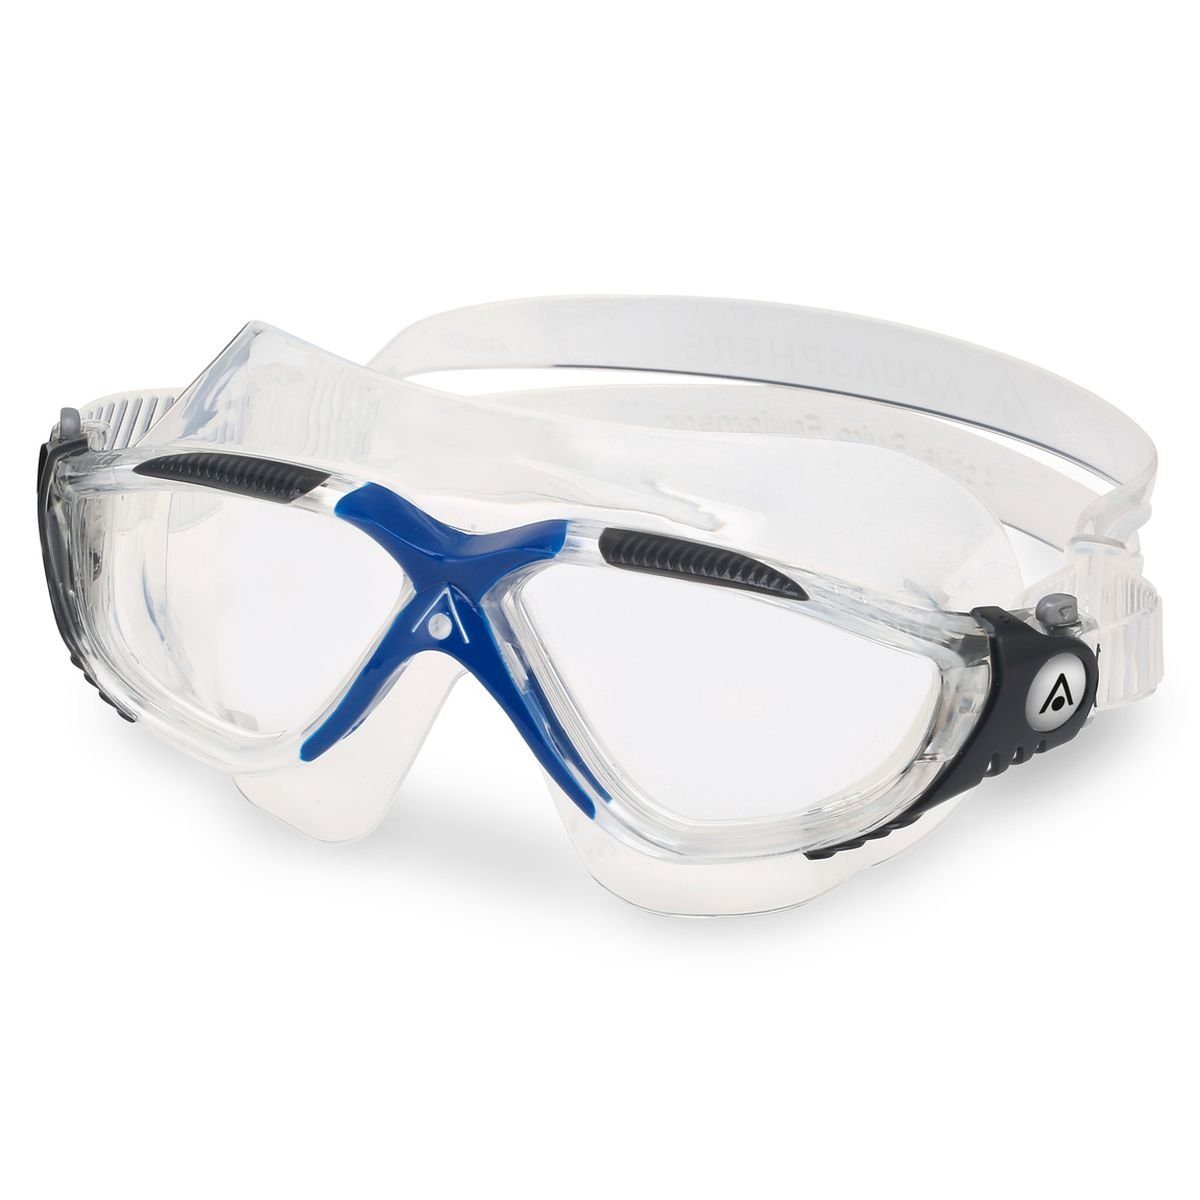 Schwimmaske transparent/blau Aquasphere Vista Schwimmbrille